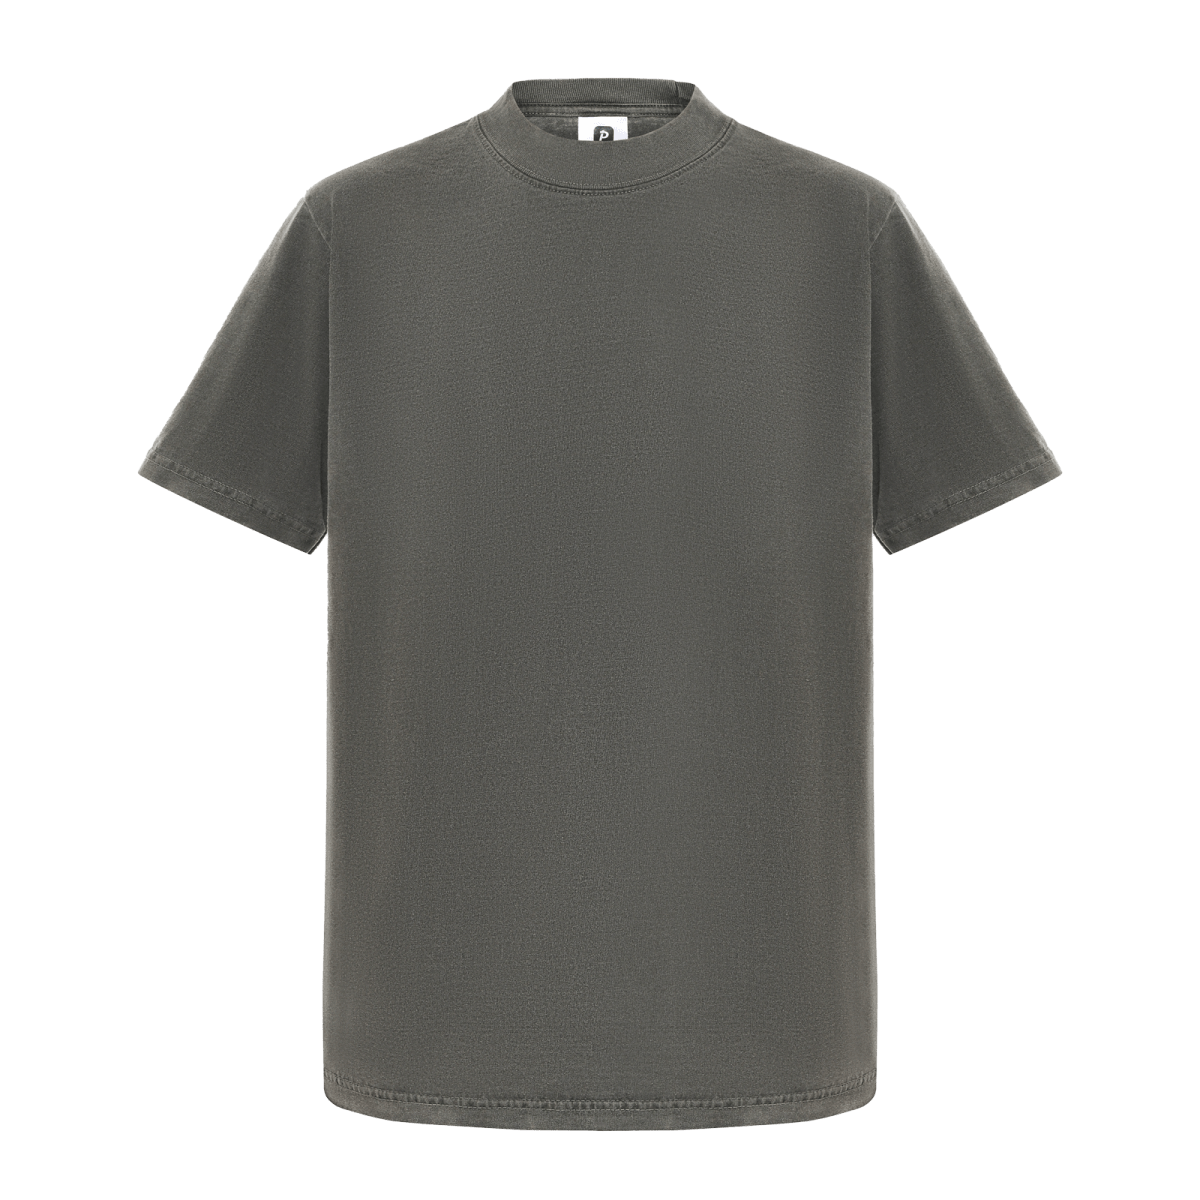 Garment Dye T-Shirt - Standard Size - Shadow